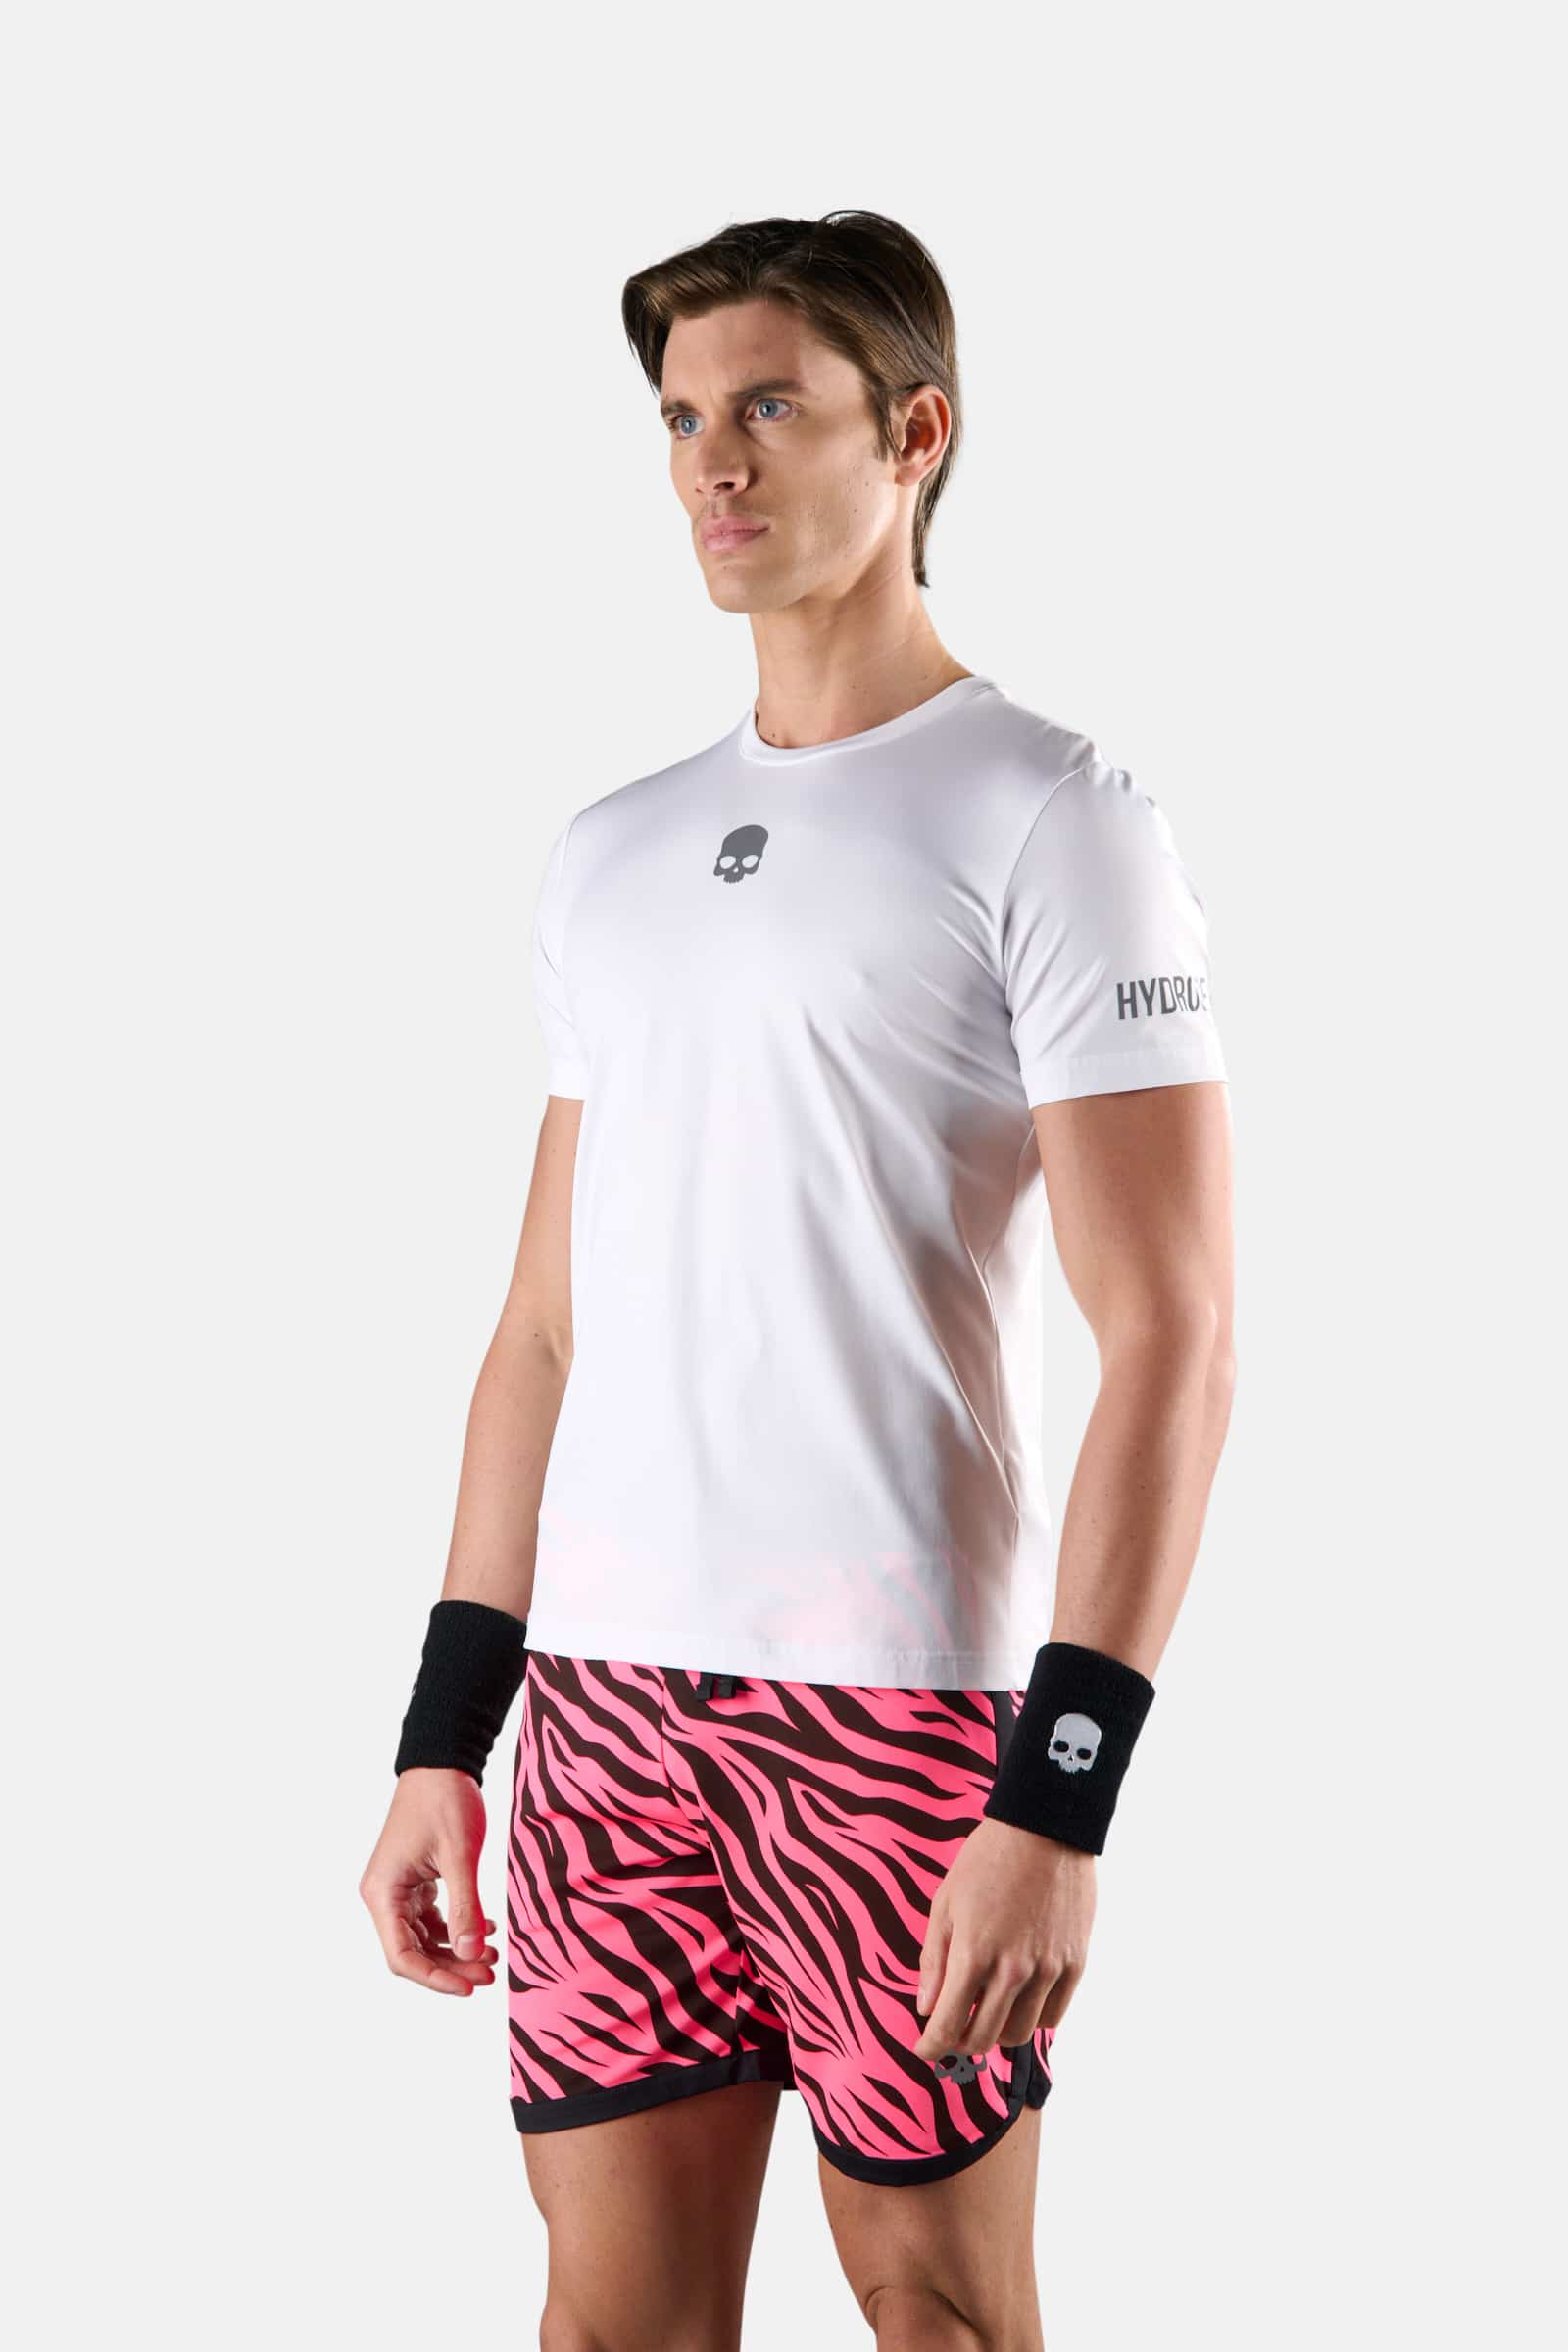 BASIC TECH TEE - WHITE - Abbigliamento sportivo | Hydrogen